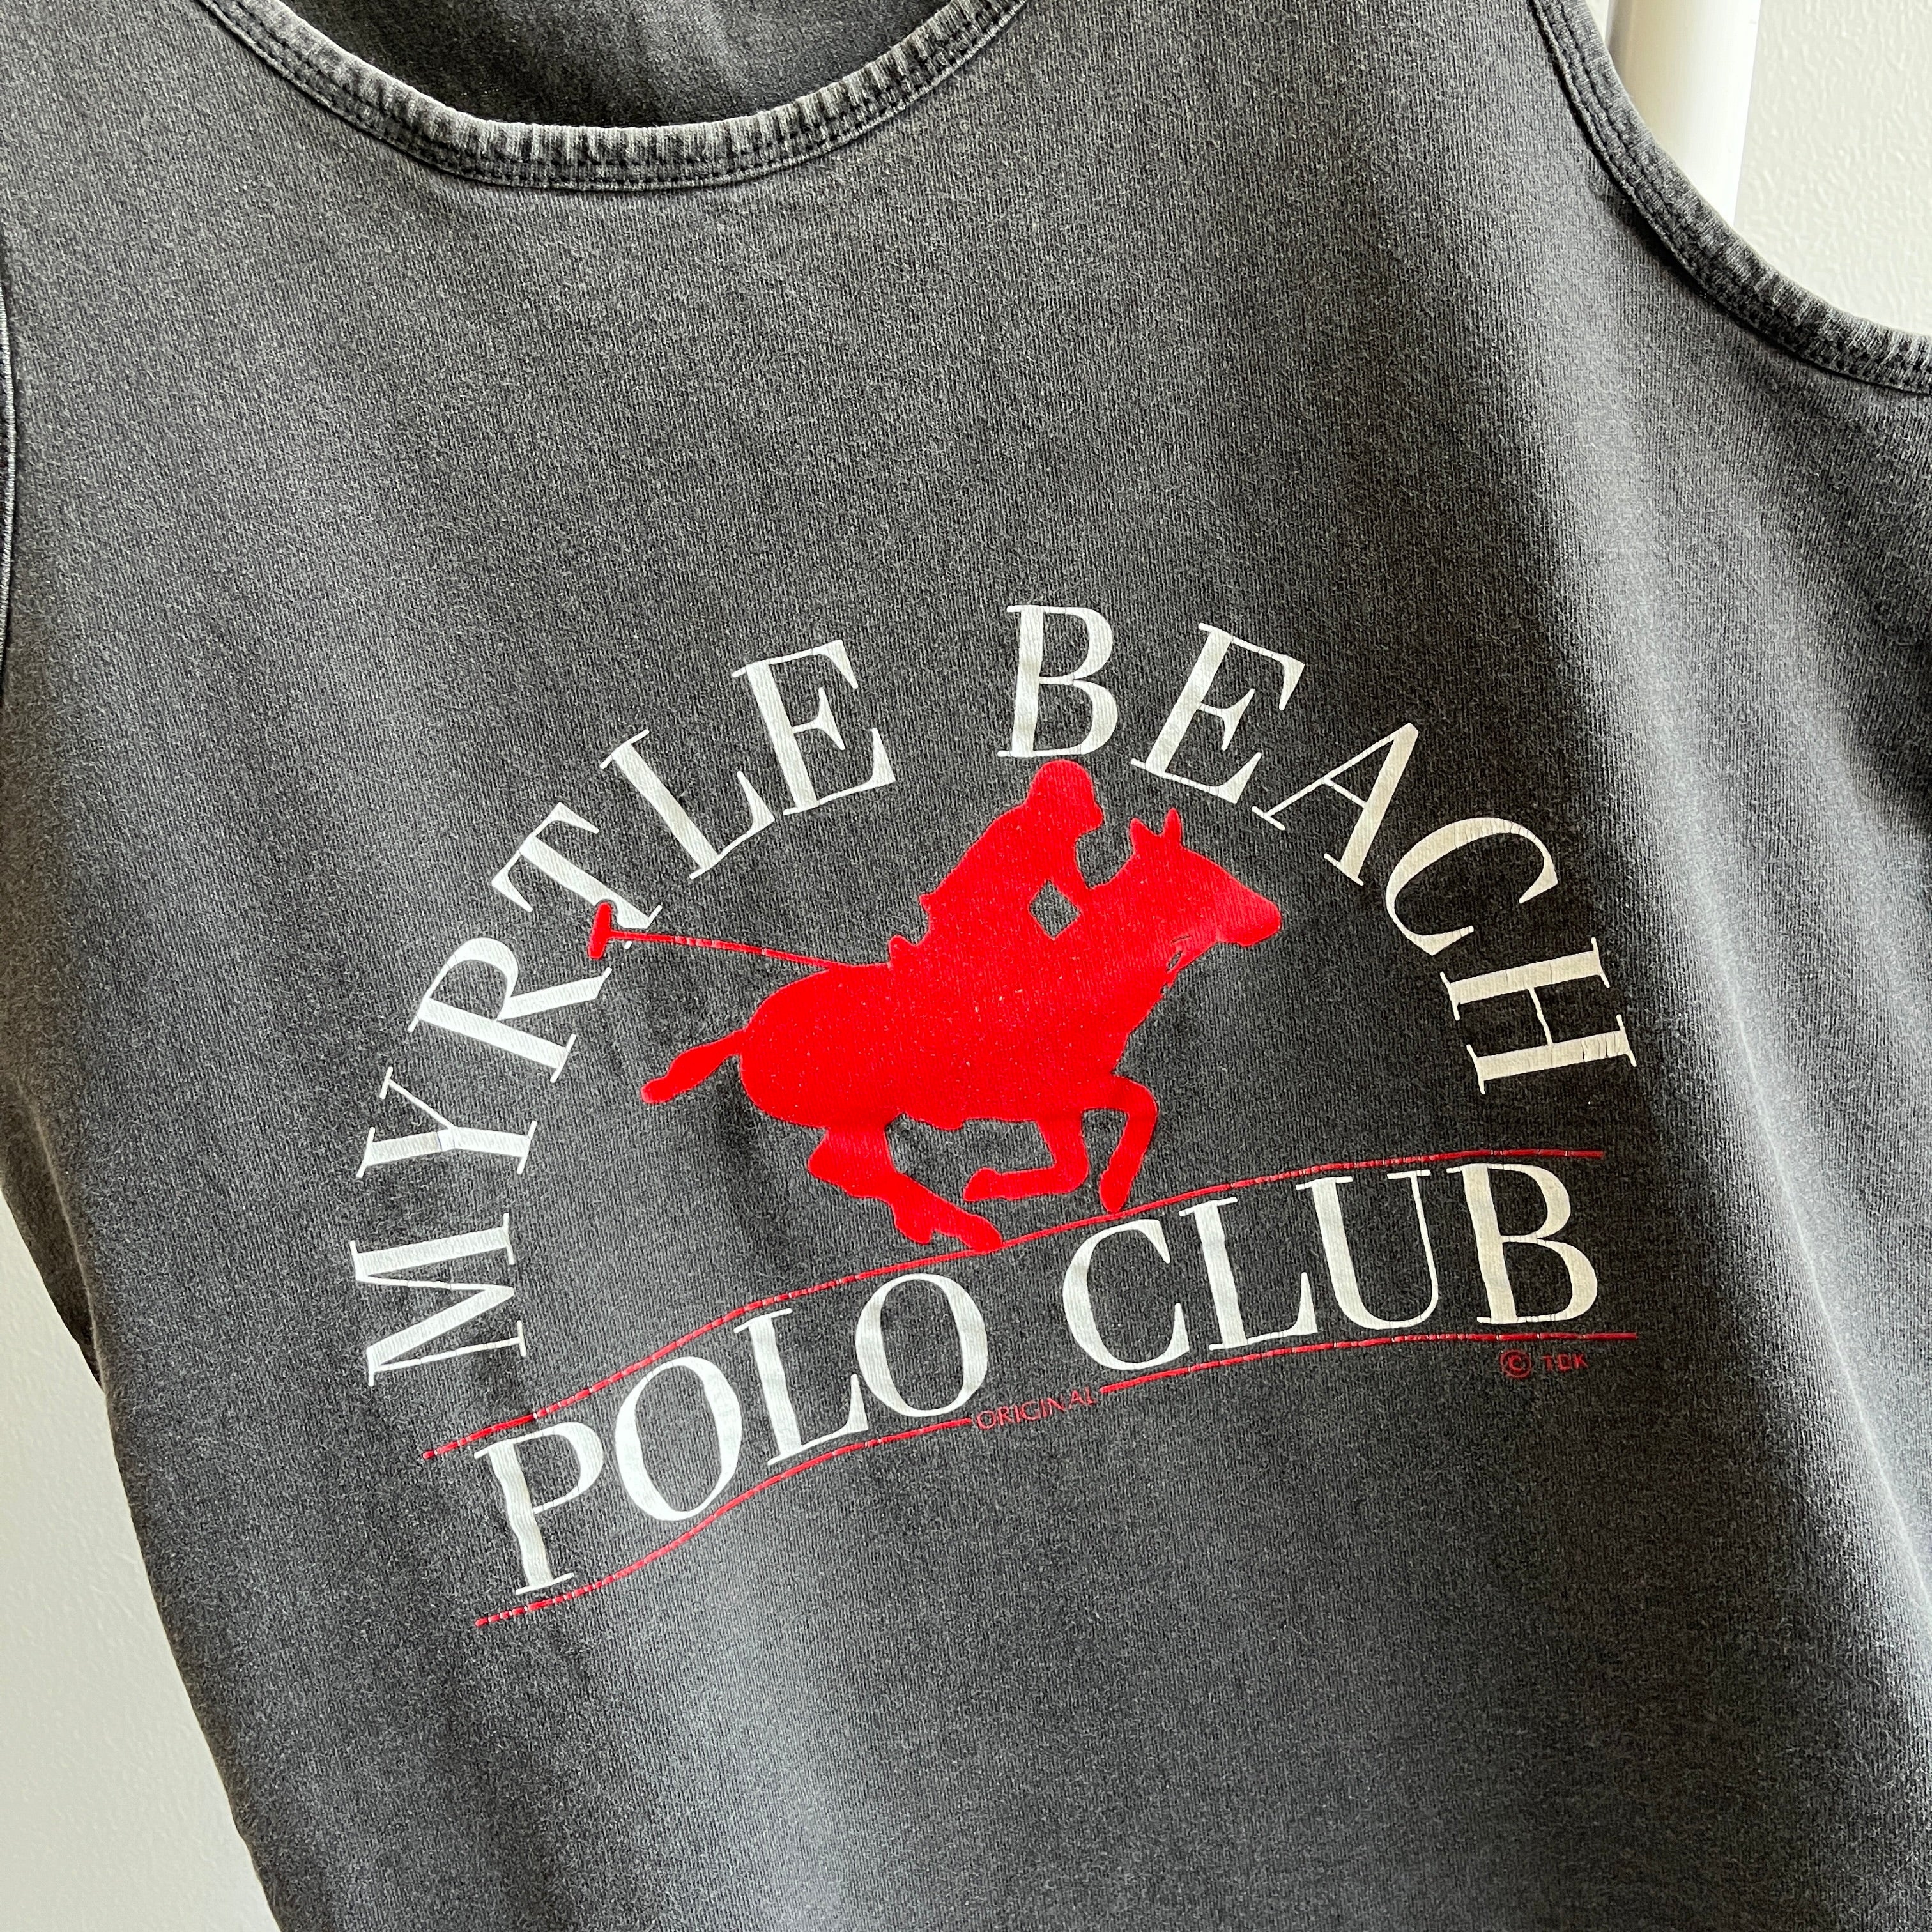 1990s Myrtle Beach Polo Club Tank Top